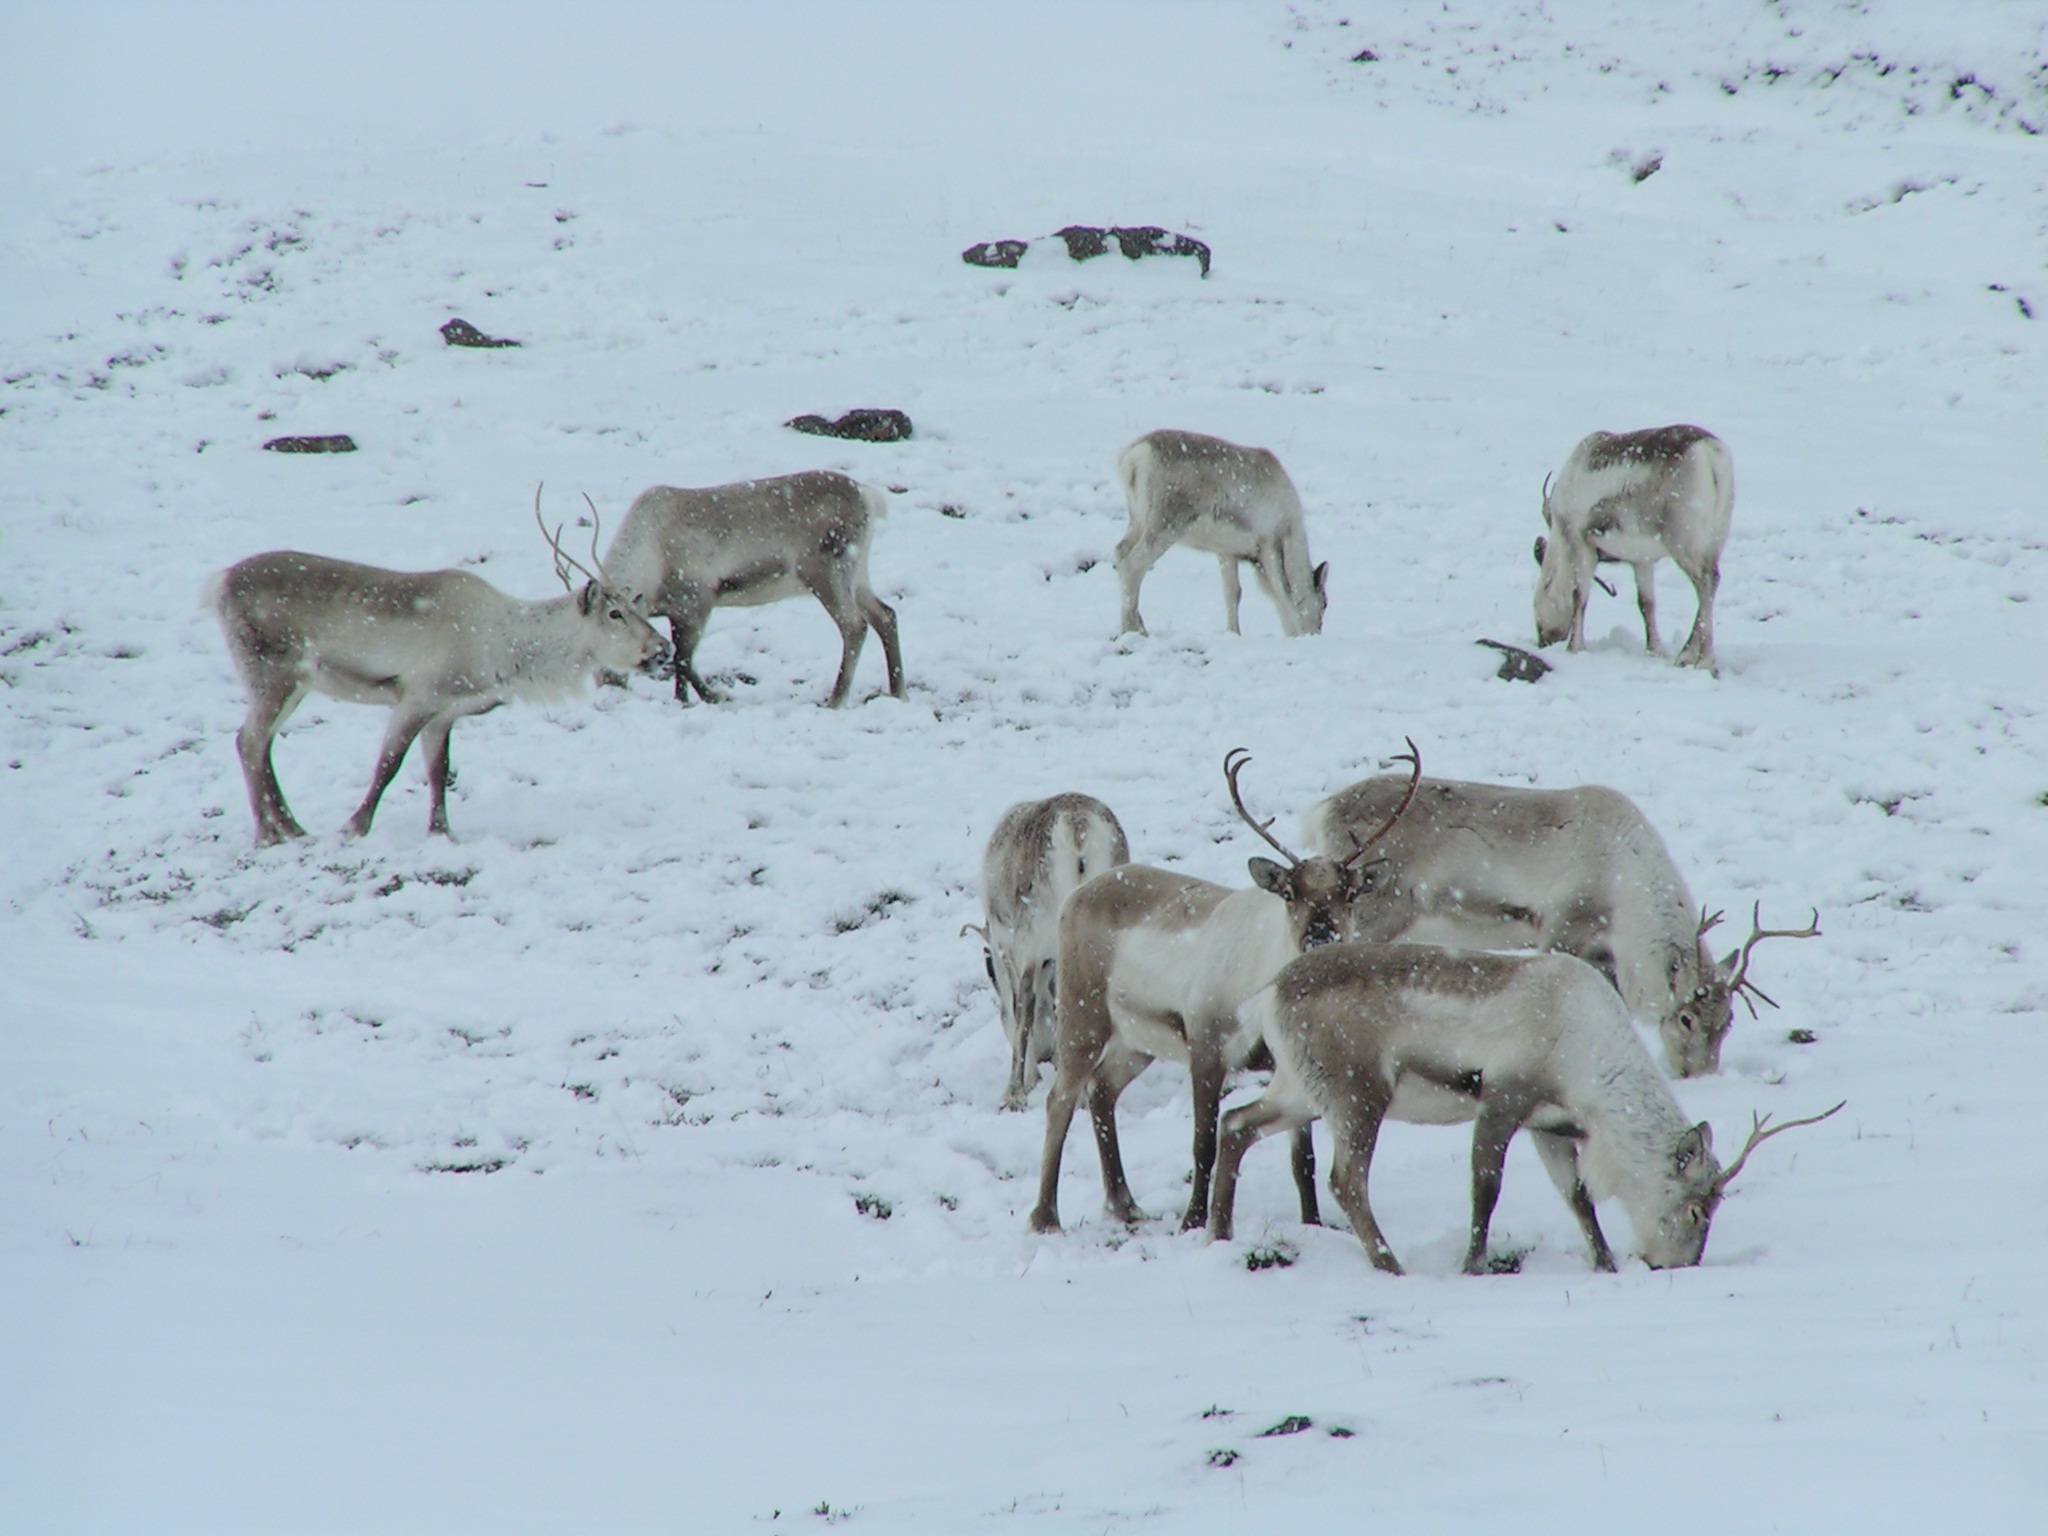 How a rainstorm killed 61,000 reindeer